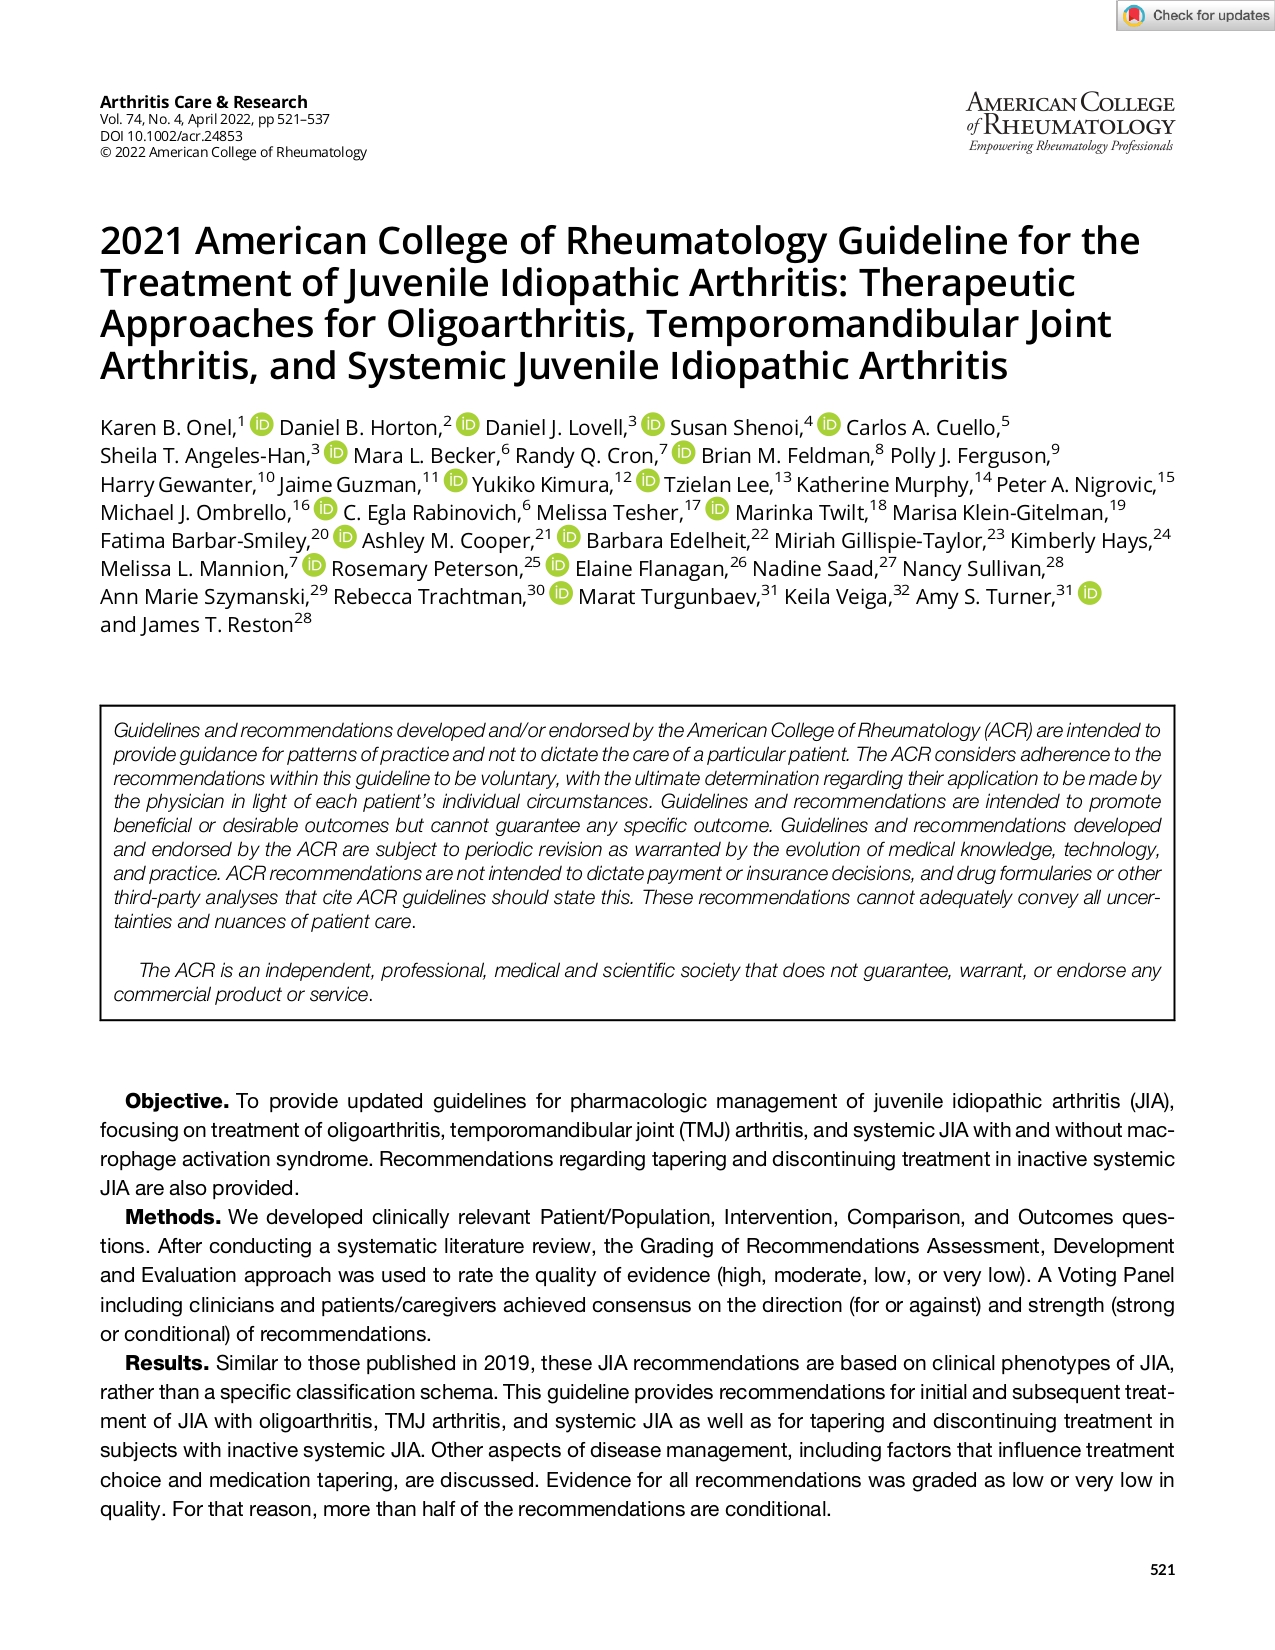 2021 American College of Rheumatology Guideline for the Treatment of Juvenile Idiopathic Arthritis: Therapeutic Approaches for Oligoarthritis, Temporomandibular Joint Arthritis, and Systemic Juvenile Idiopathic Arthritis (ACR 2021)